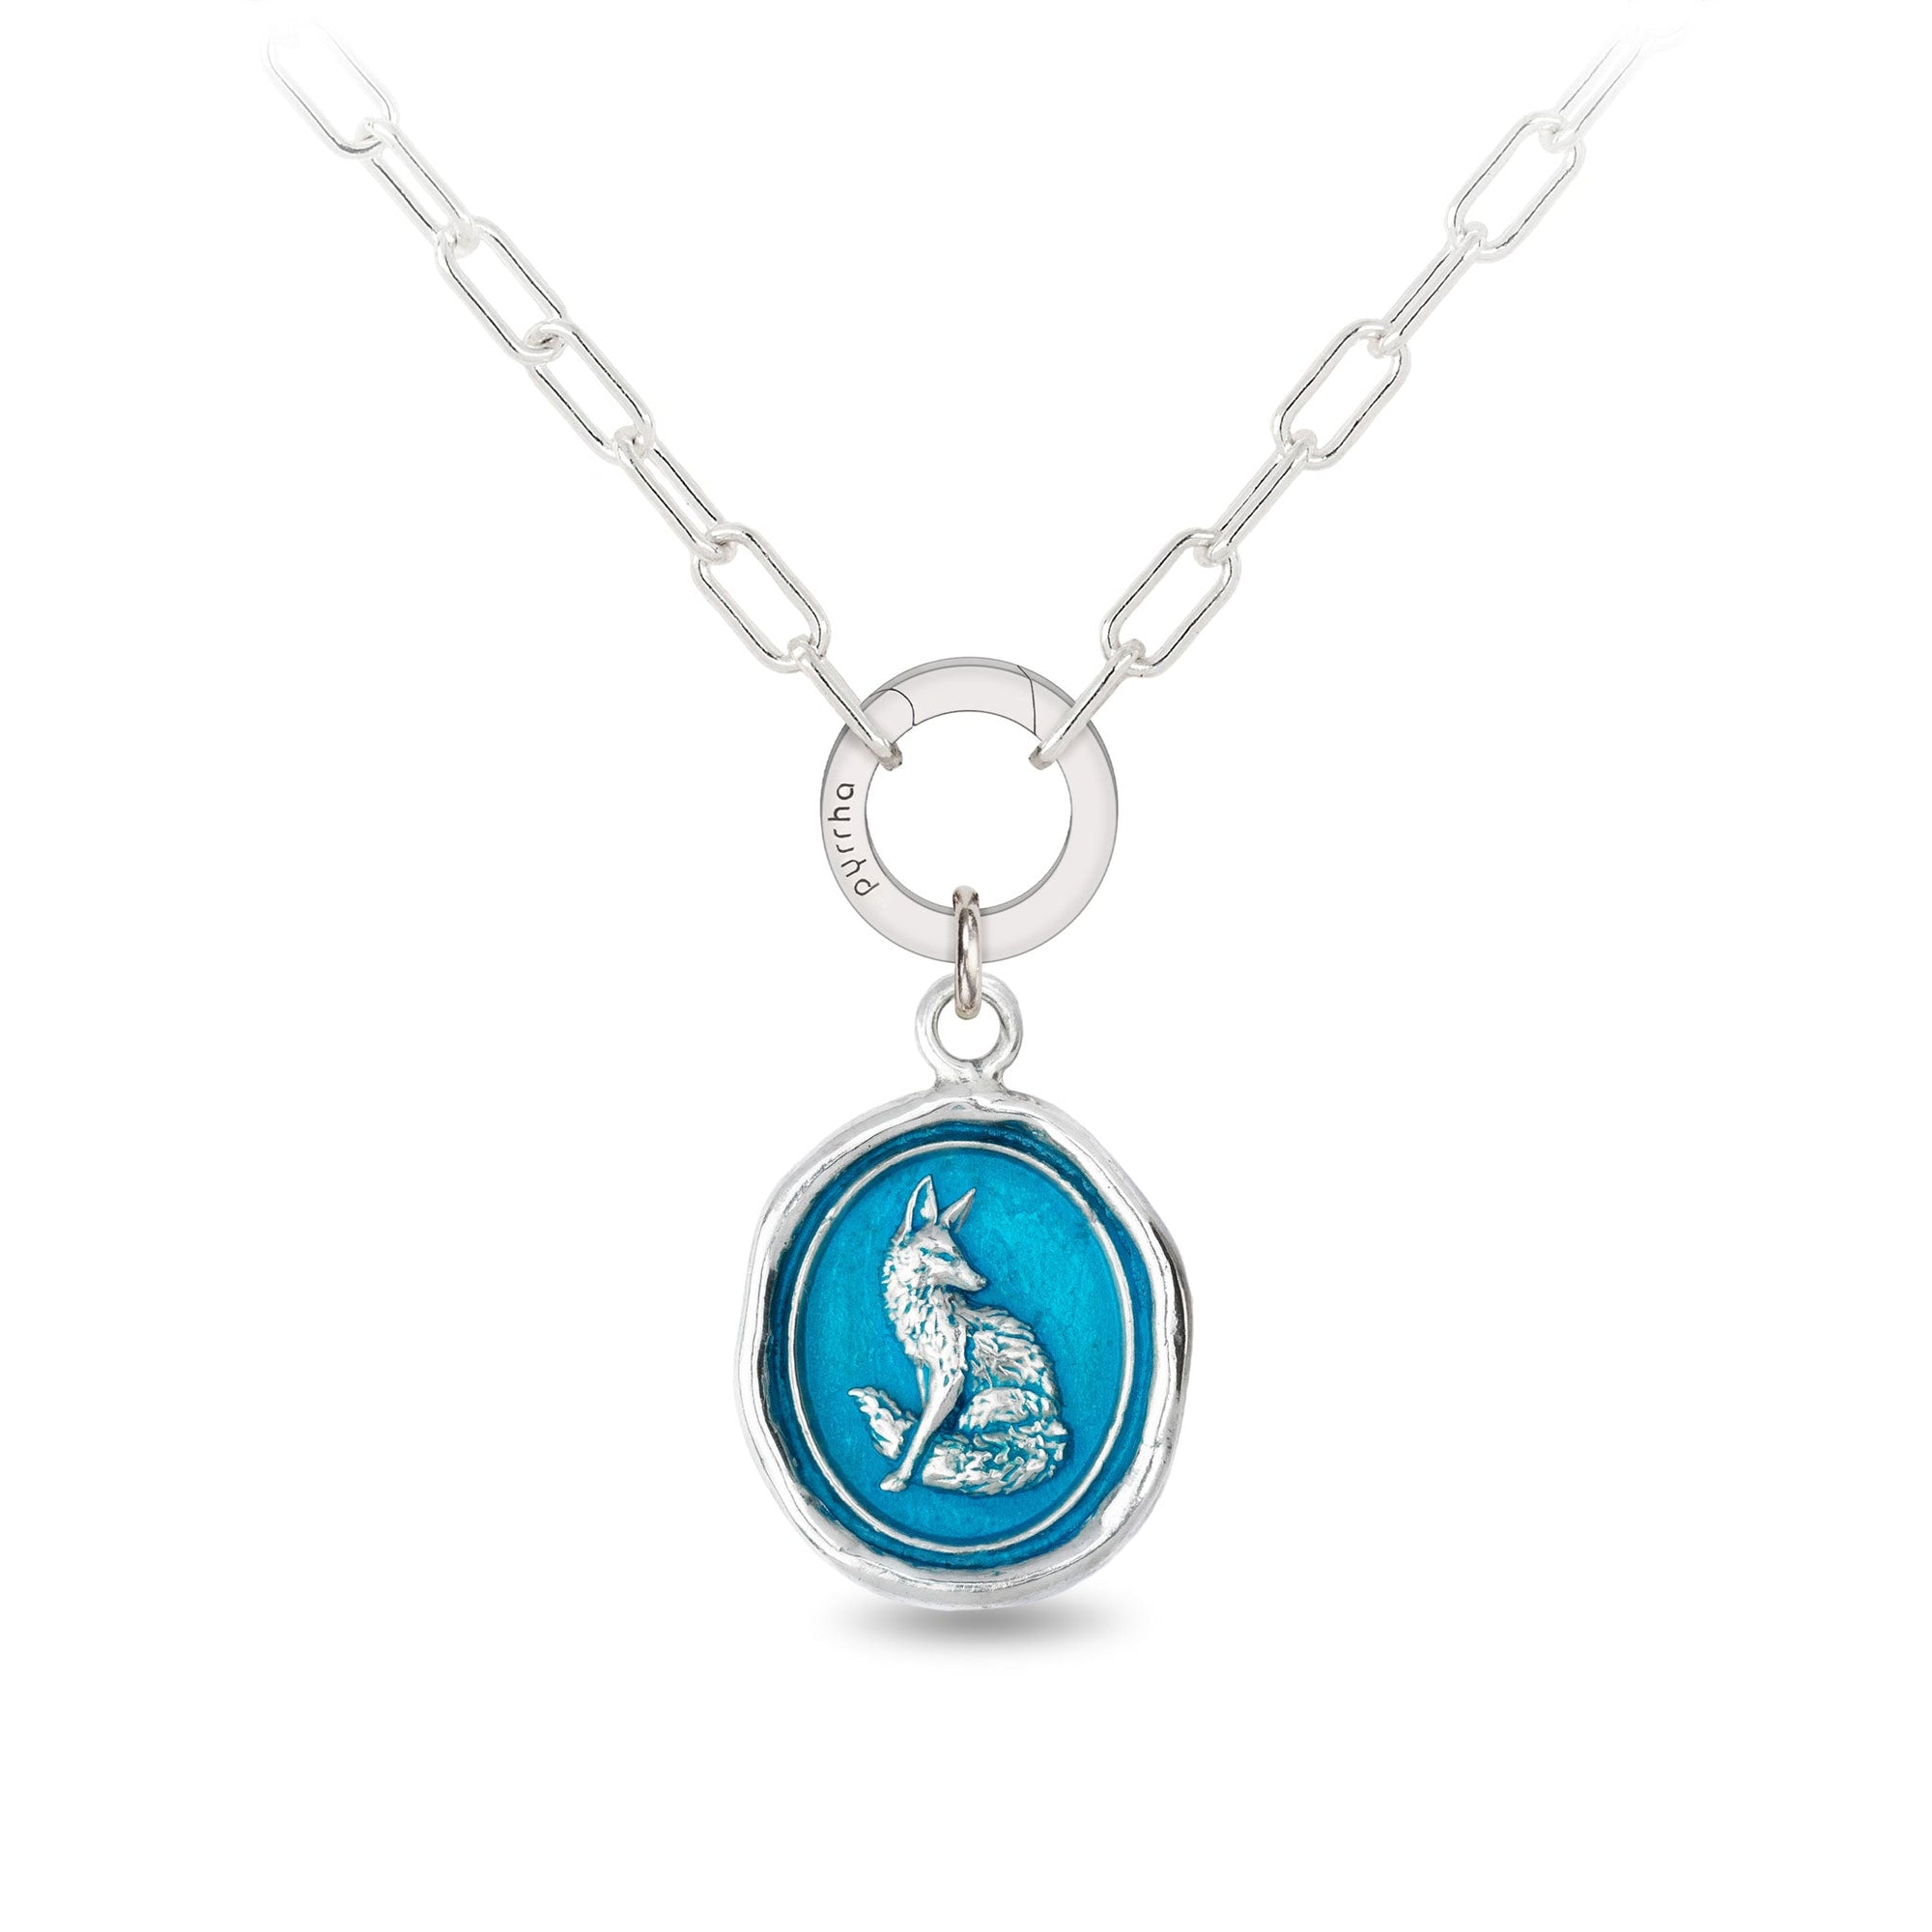 Trust in Yourself Small Paperclip Chain Necklace - Capri Blue